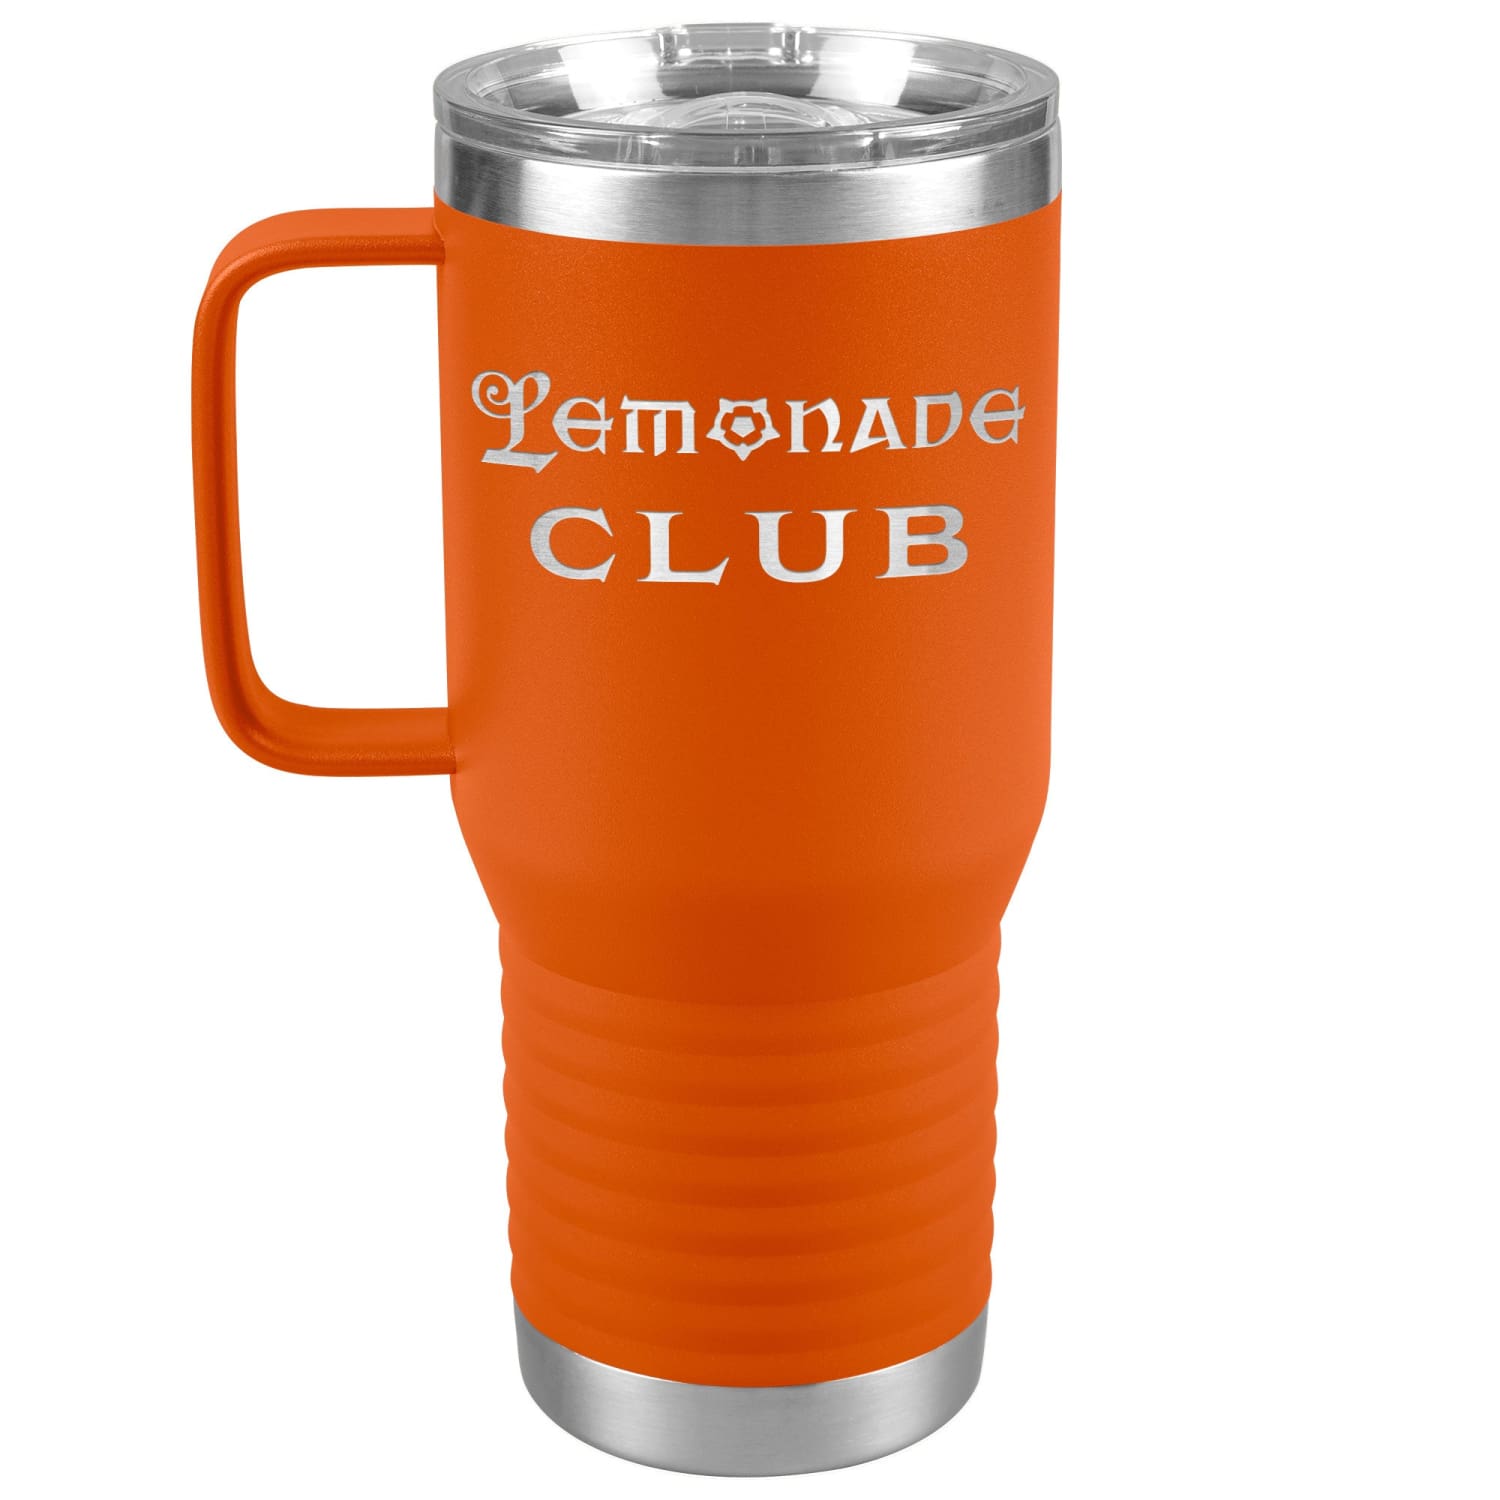 Arkenholdt Lemonade Club 20oz Travel Tumbler - Orange - Tumblers